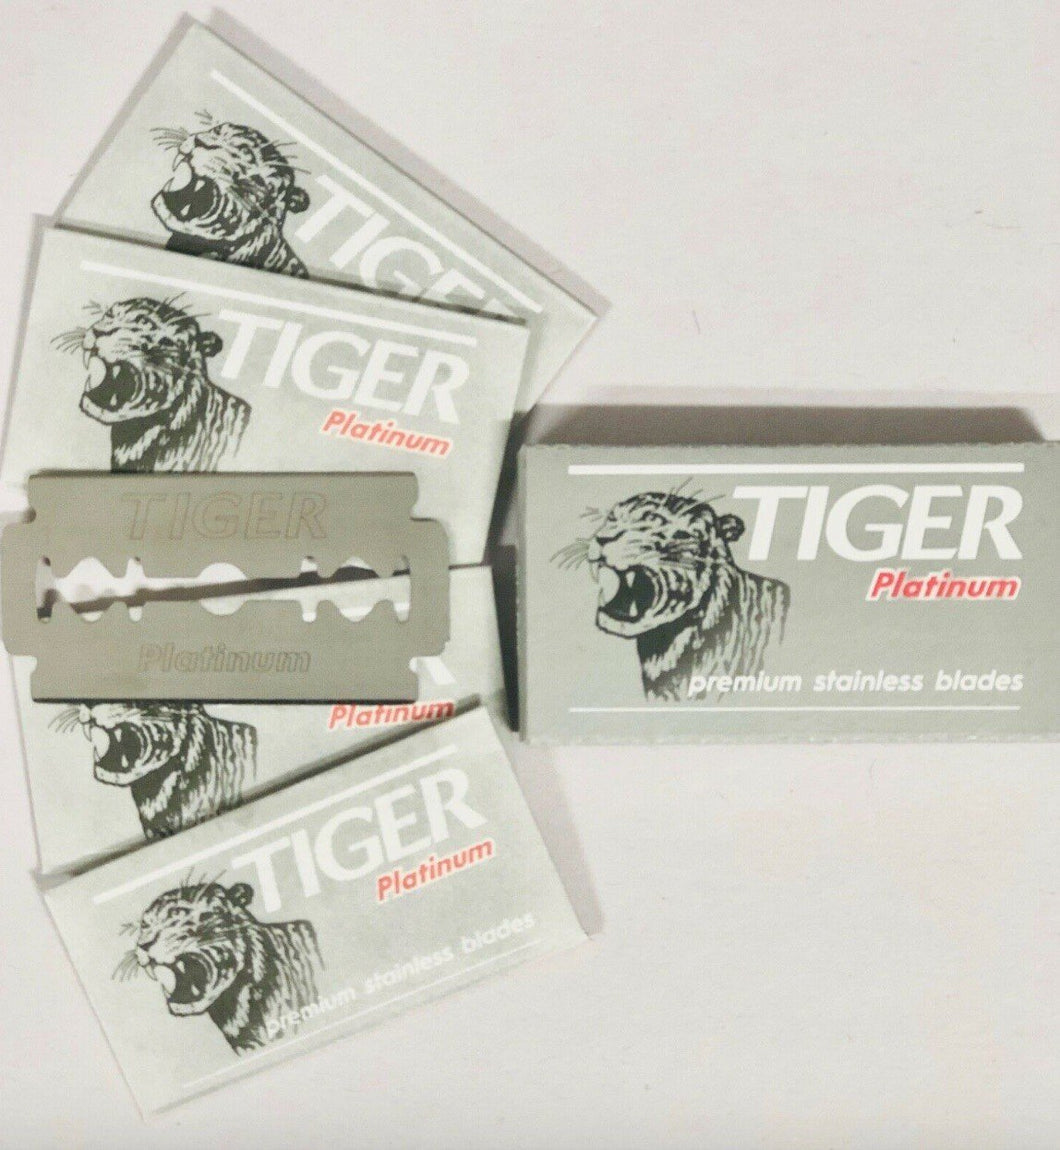 Tiger Platinum Double Edge Safety Razor Blades (1000)